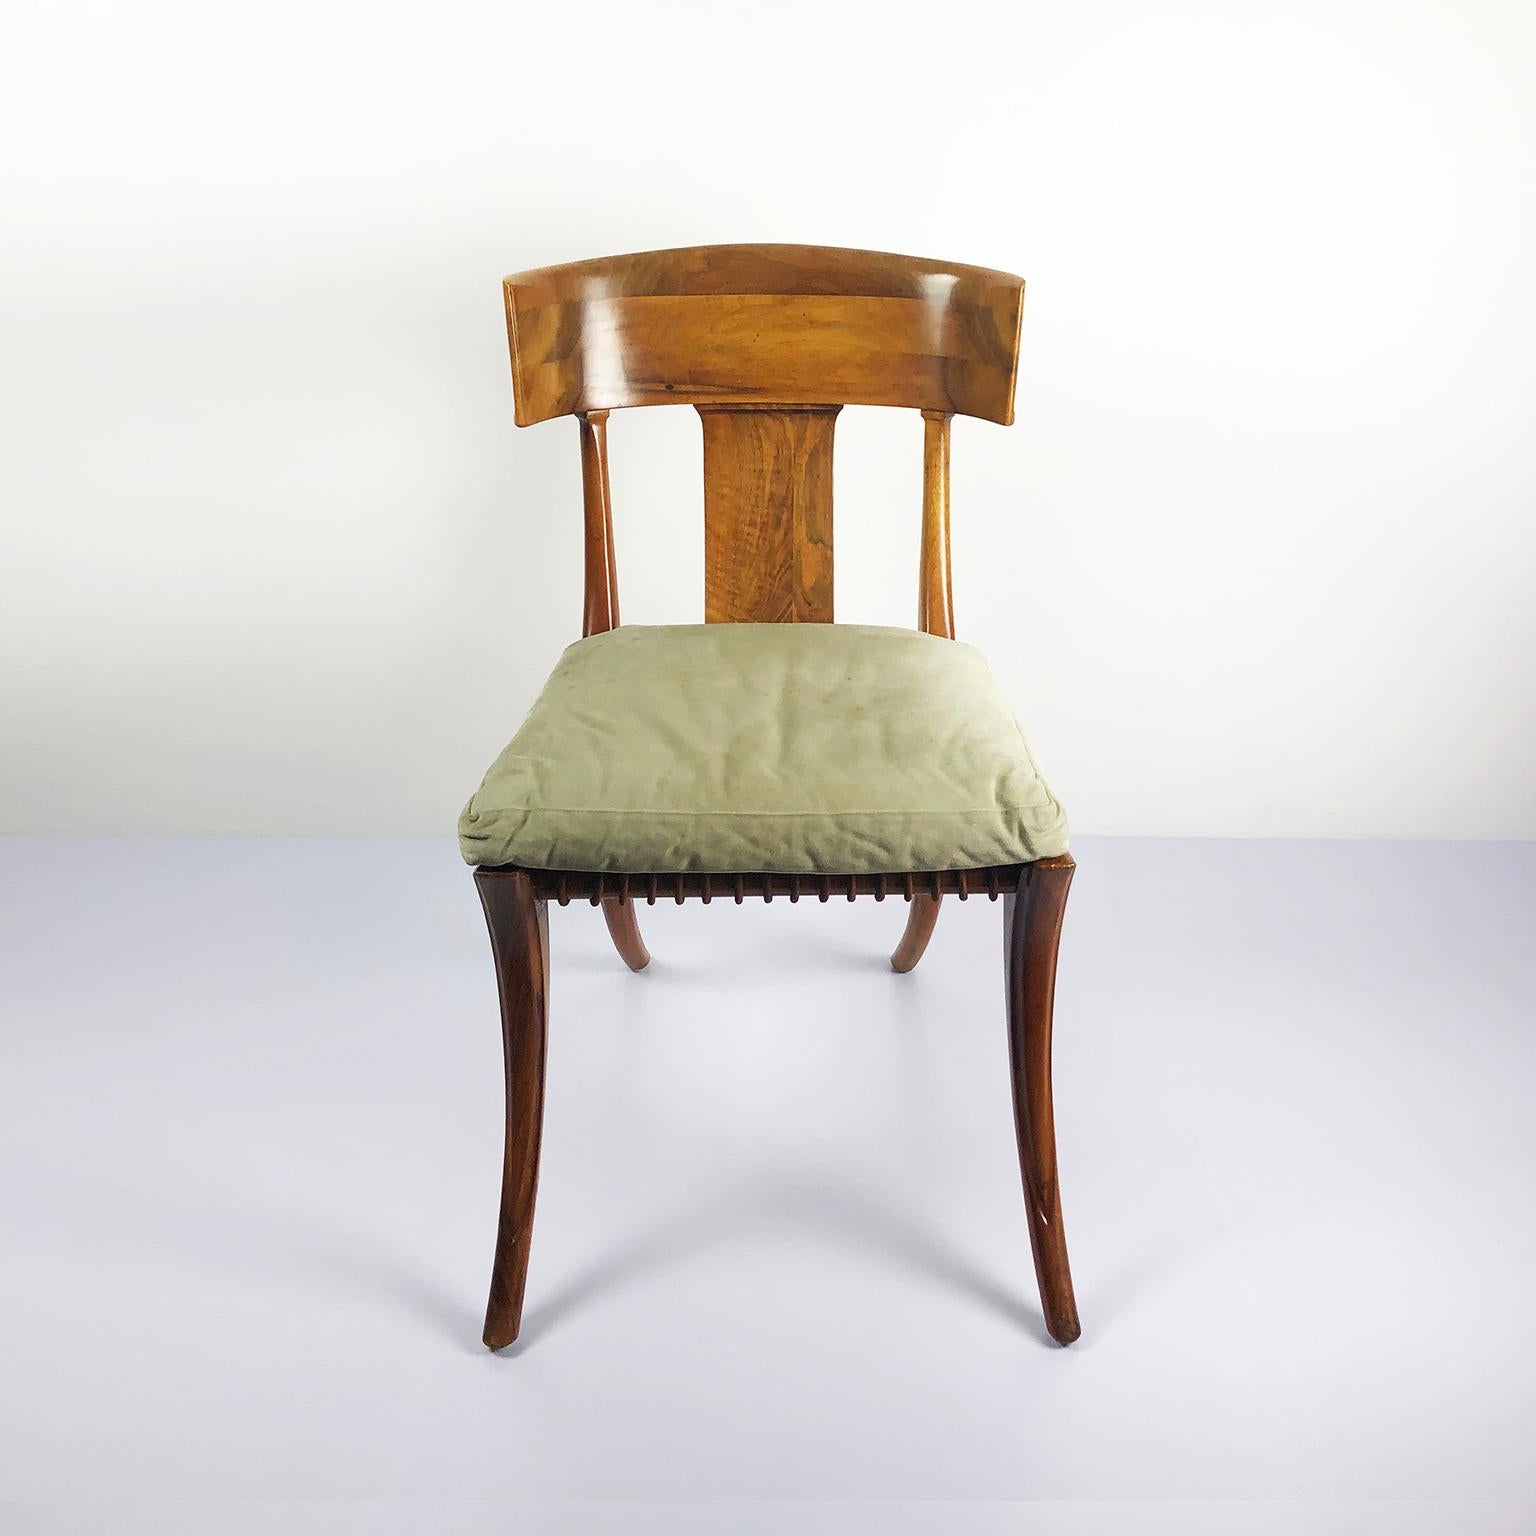 Unknown Pair of Klismos Chairs Attributed to Robsjohn-Gibbings